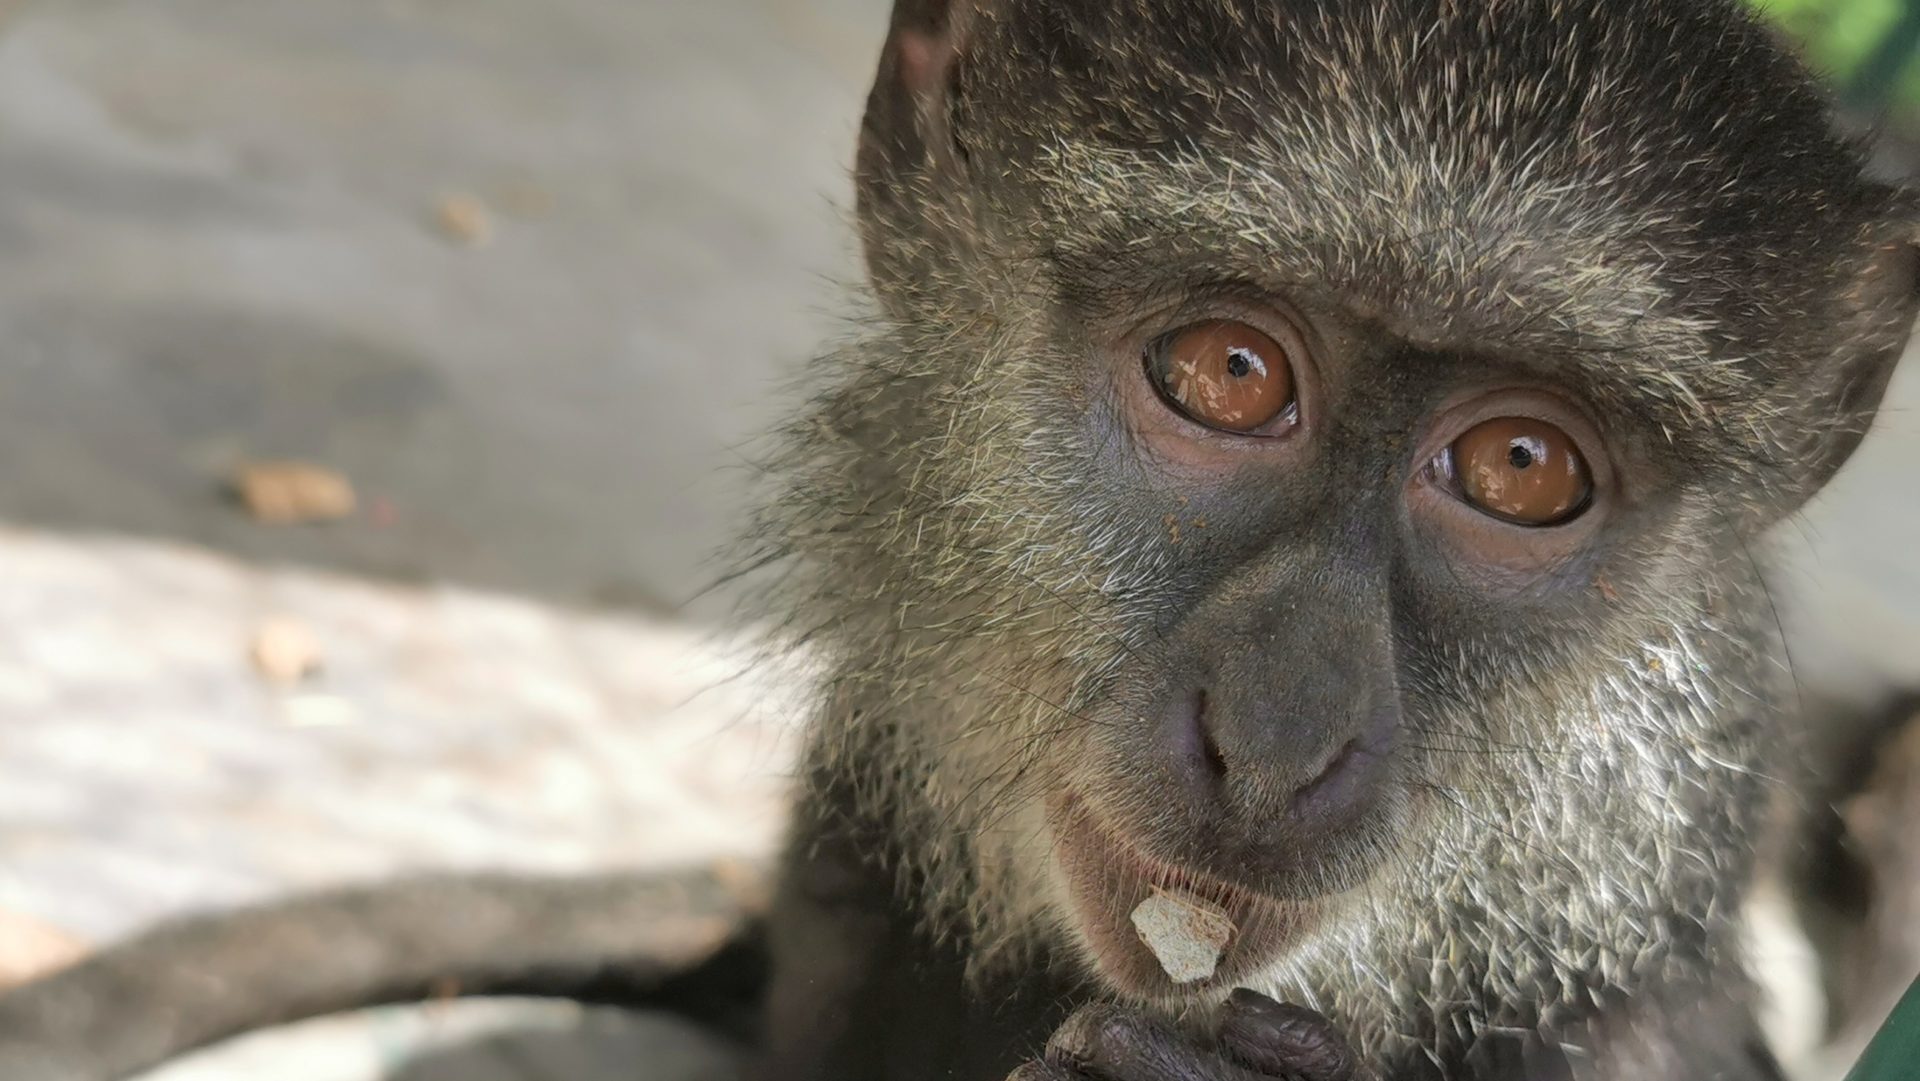 Rescue of 25 primates: works continue (part 2)